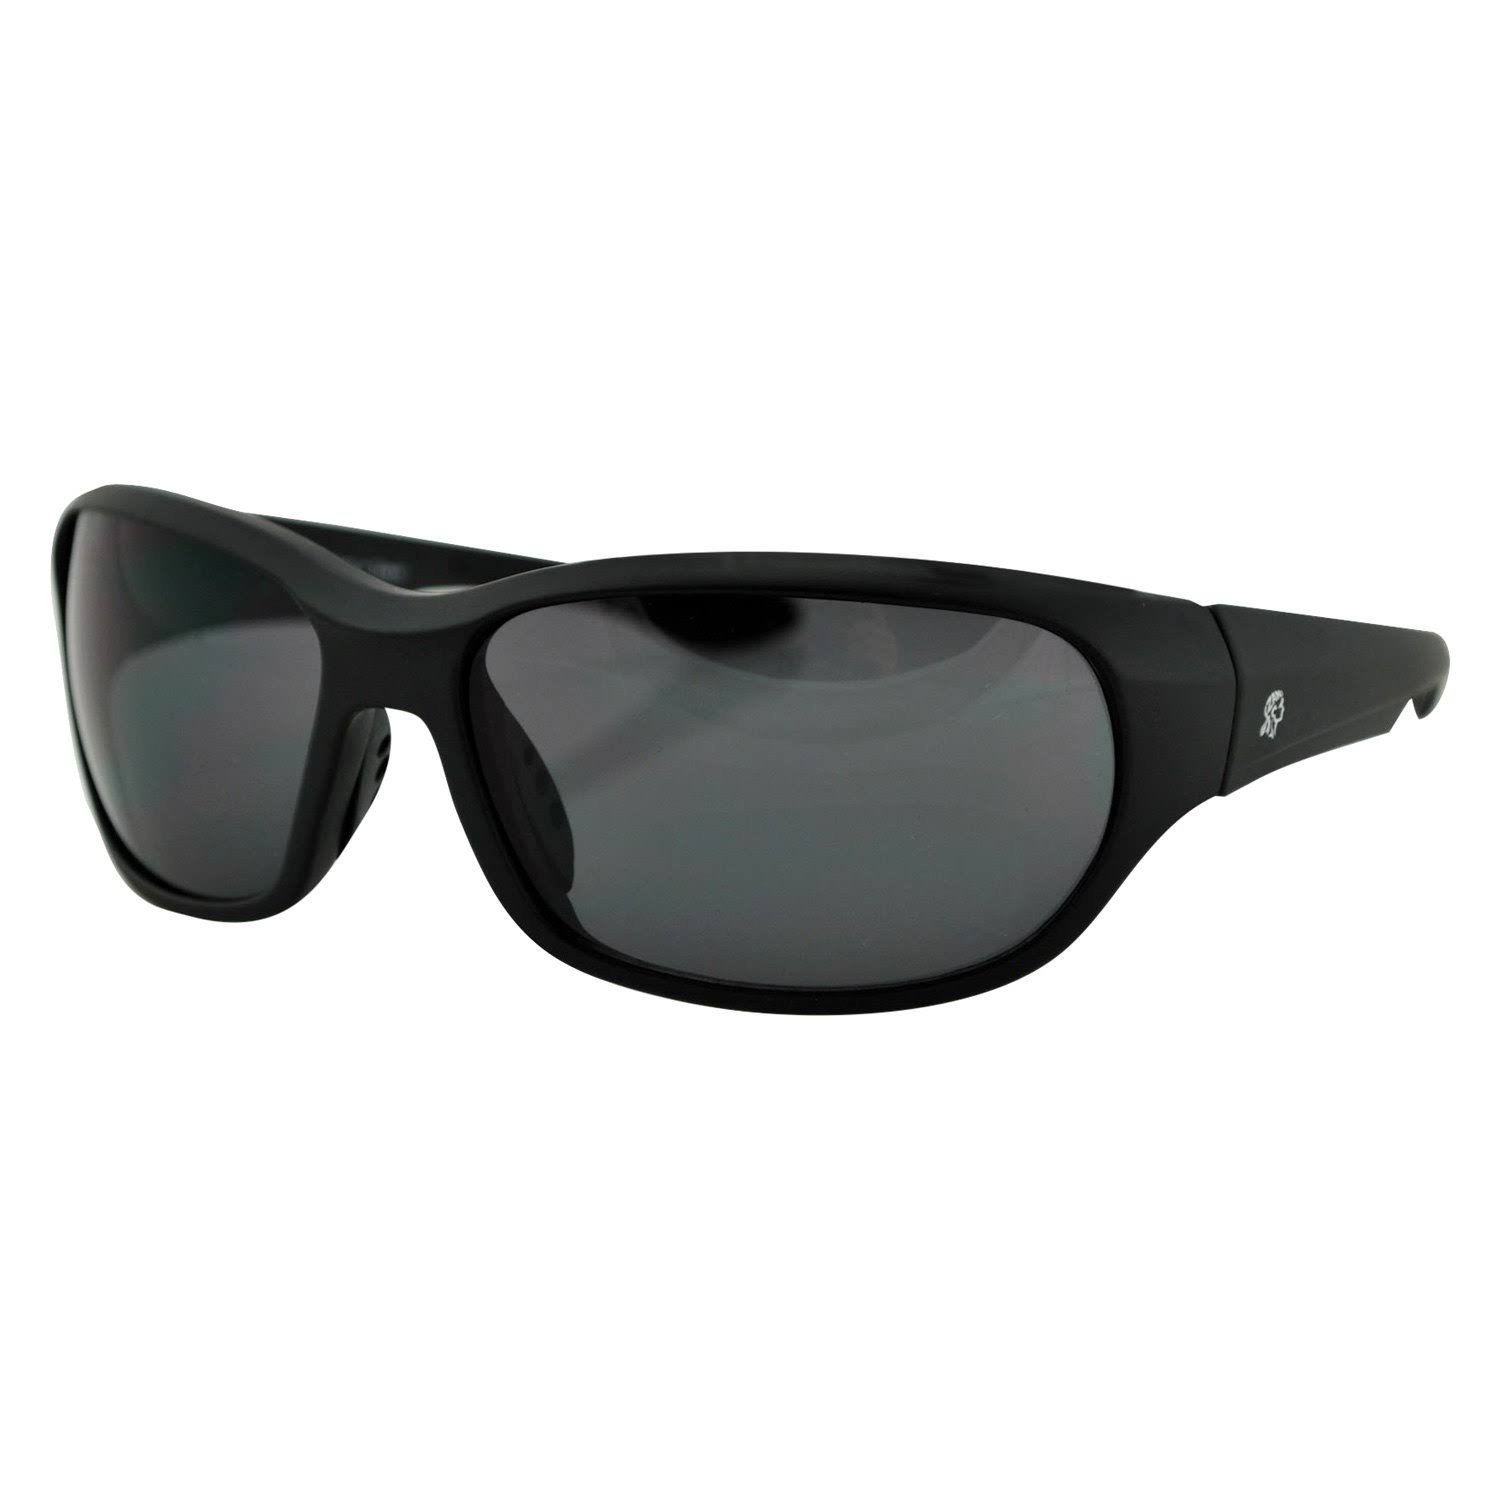 Zan New Jersey Sunglasses Smoke Lens Matte Black Frame